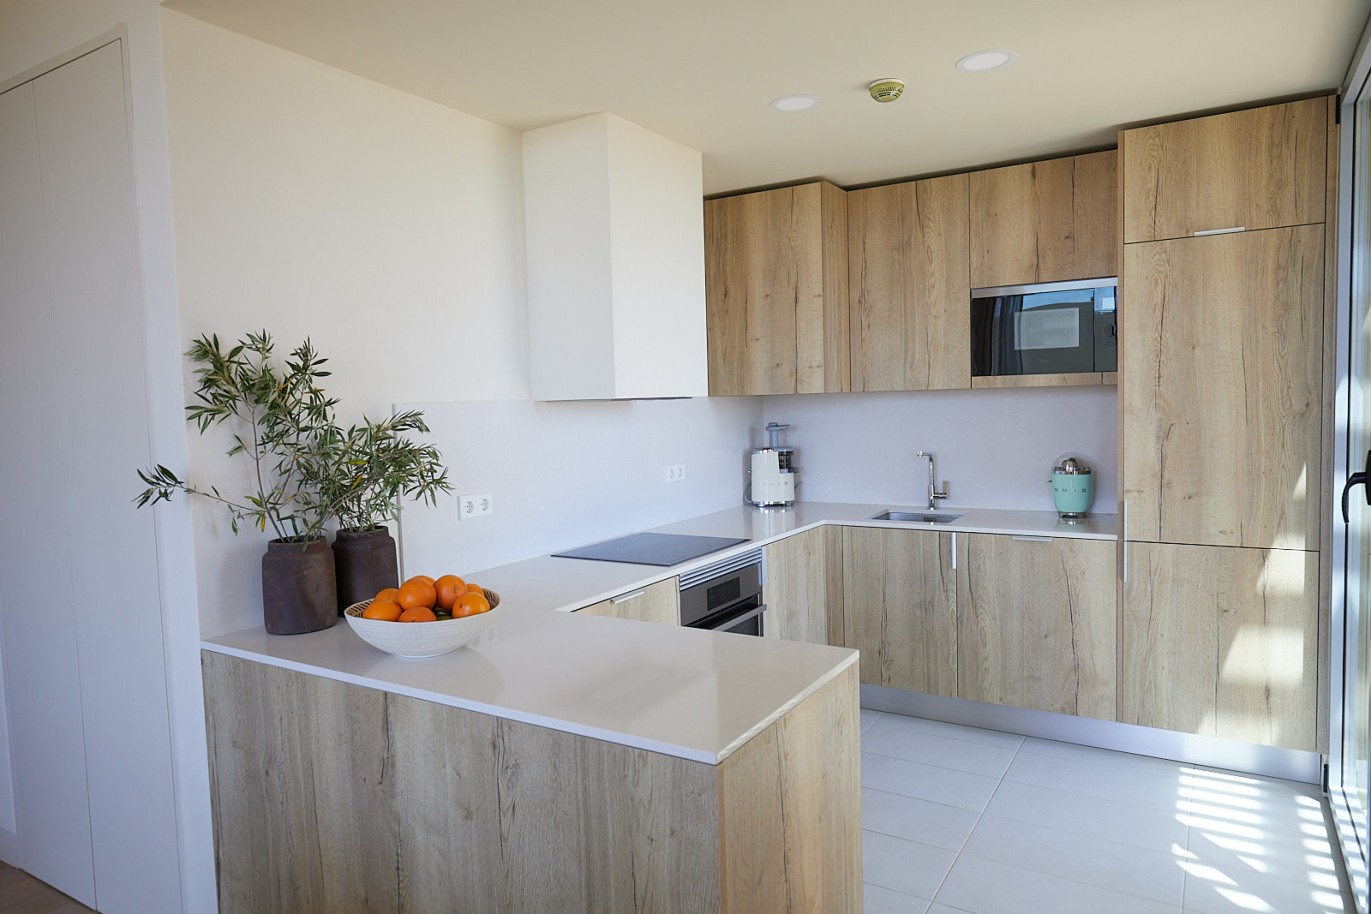 2 bedroom apartment in resort, for sale in Porches, Algarve_229180